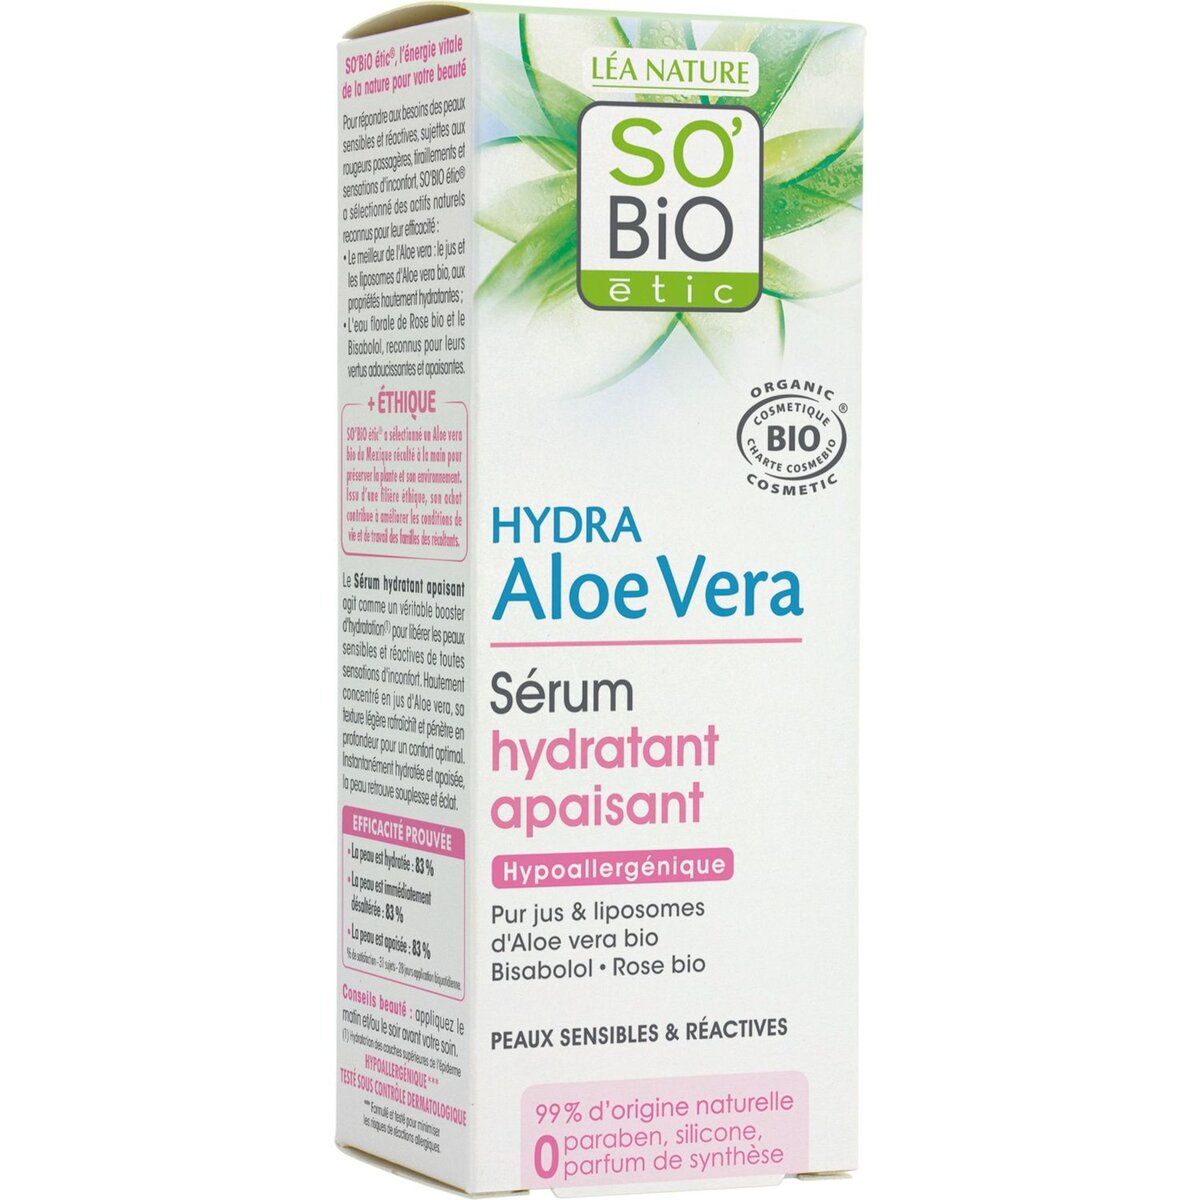 SO BIO So Bio Etic serum hydratant peaux sensibles aloé vera 30ml